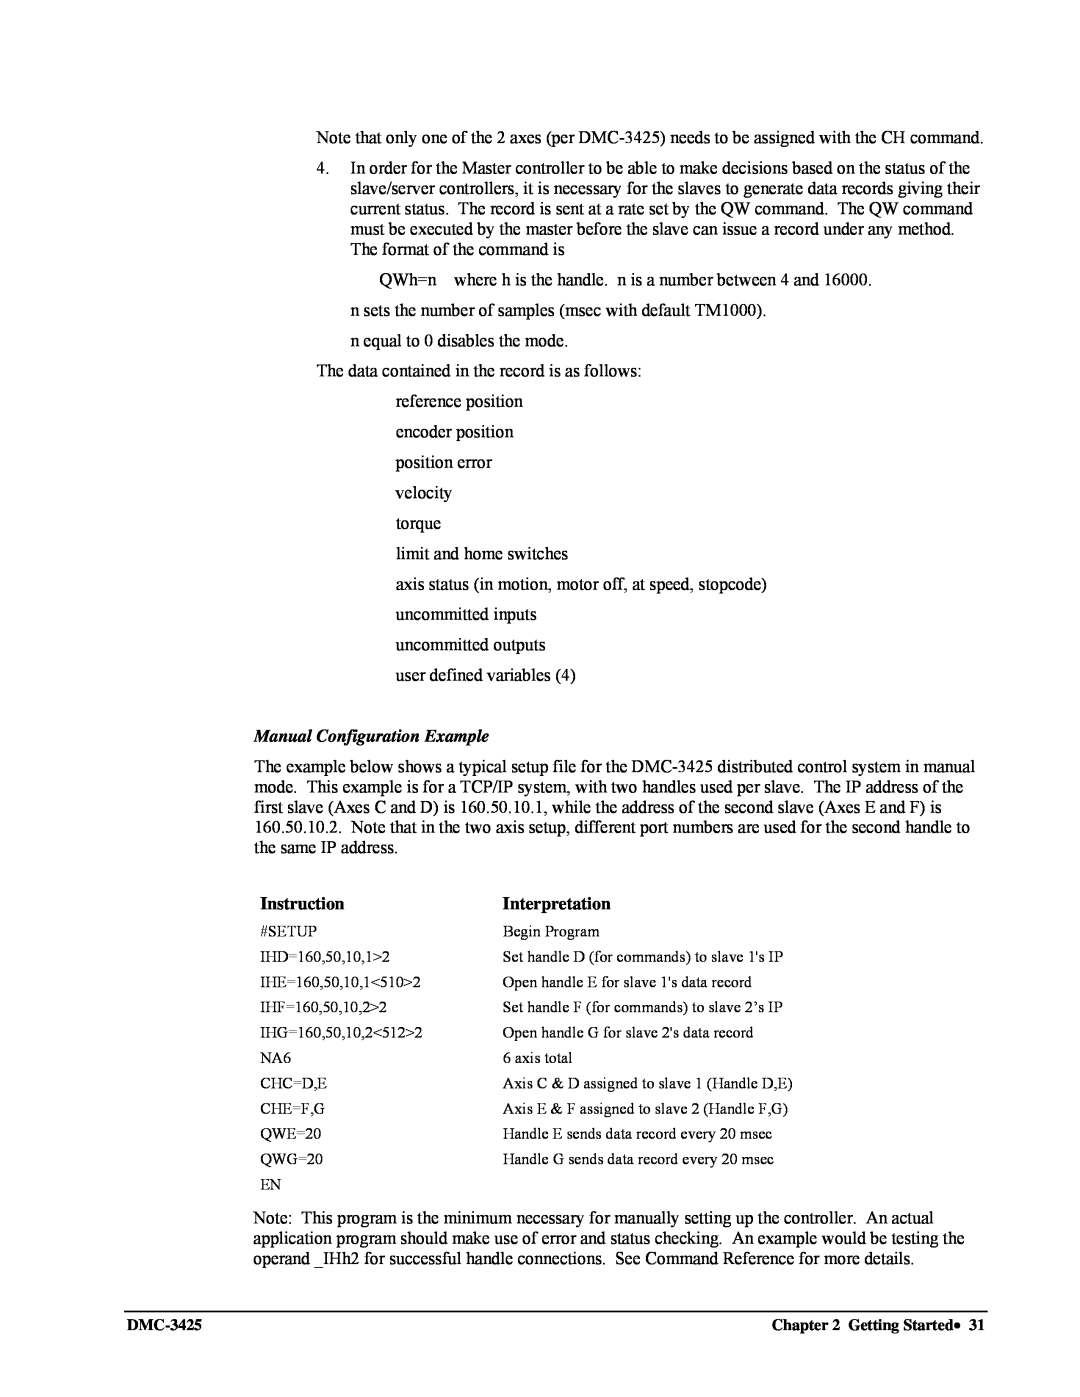 Galil DMC-3425 user manual Manual Configuration Example 